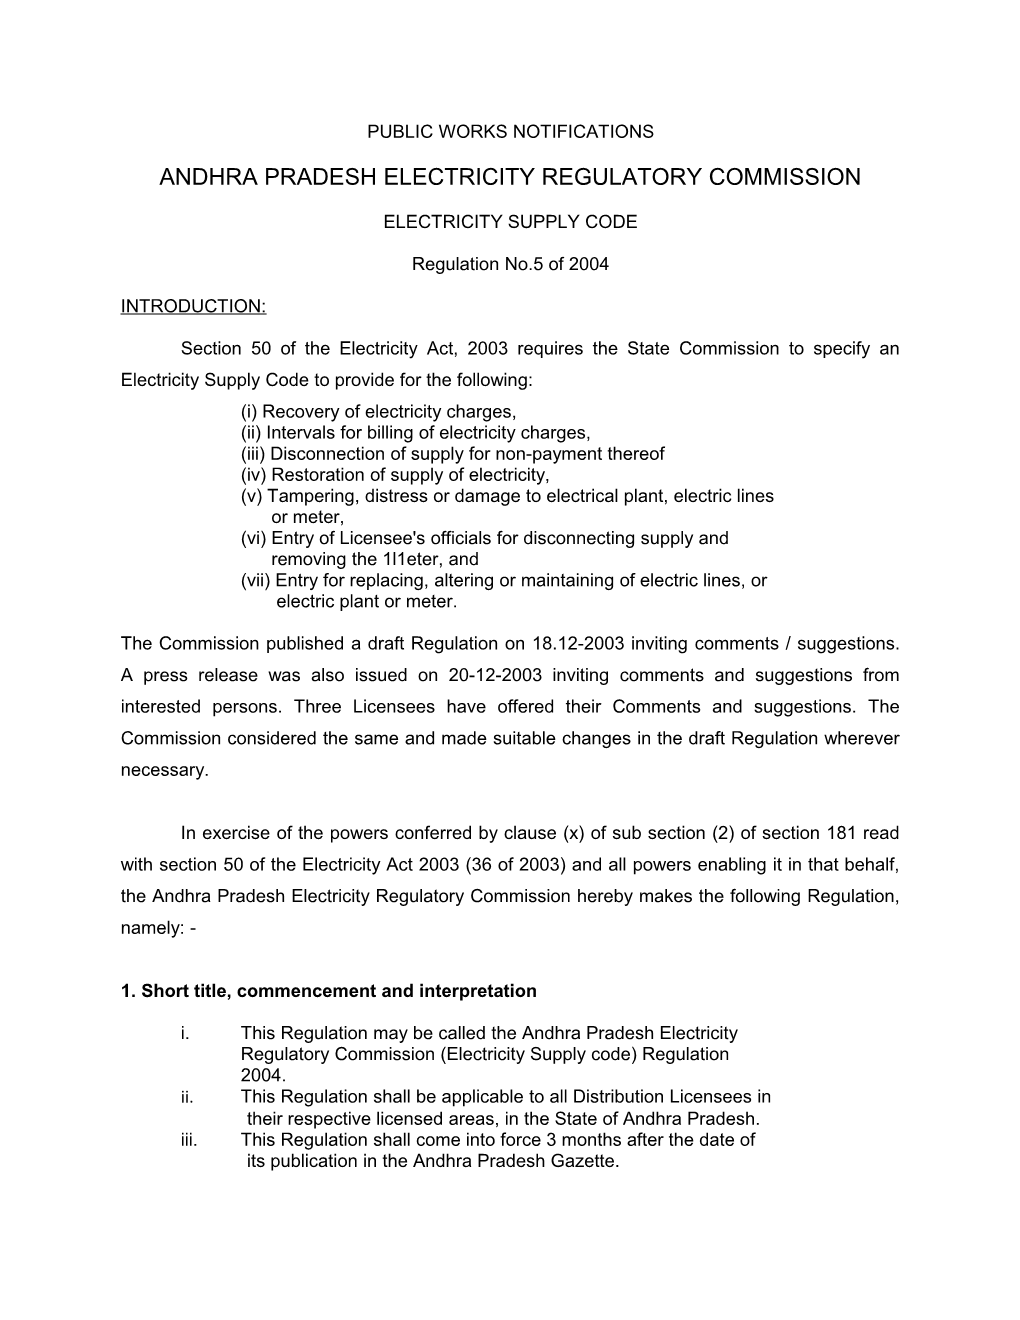 Andhra Pradesh Electricity Regulatory Commission